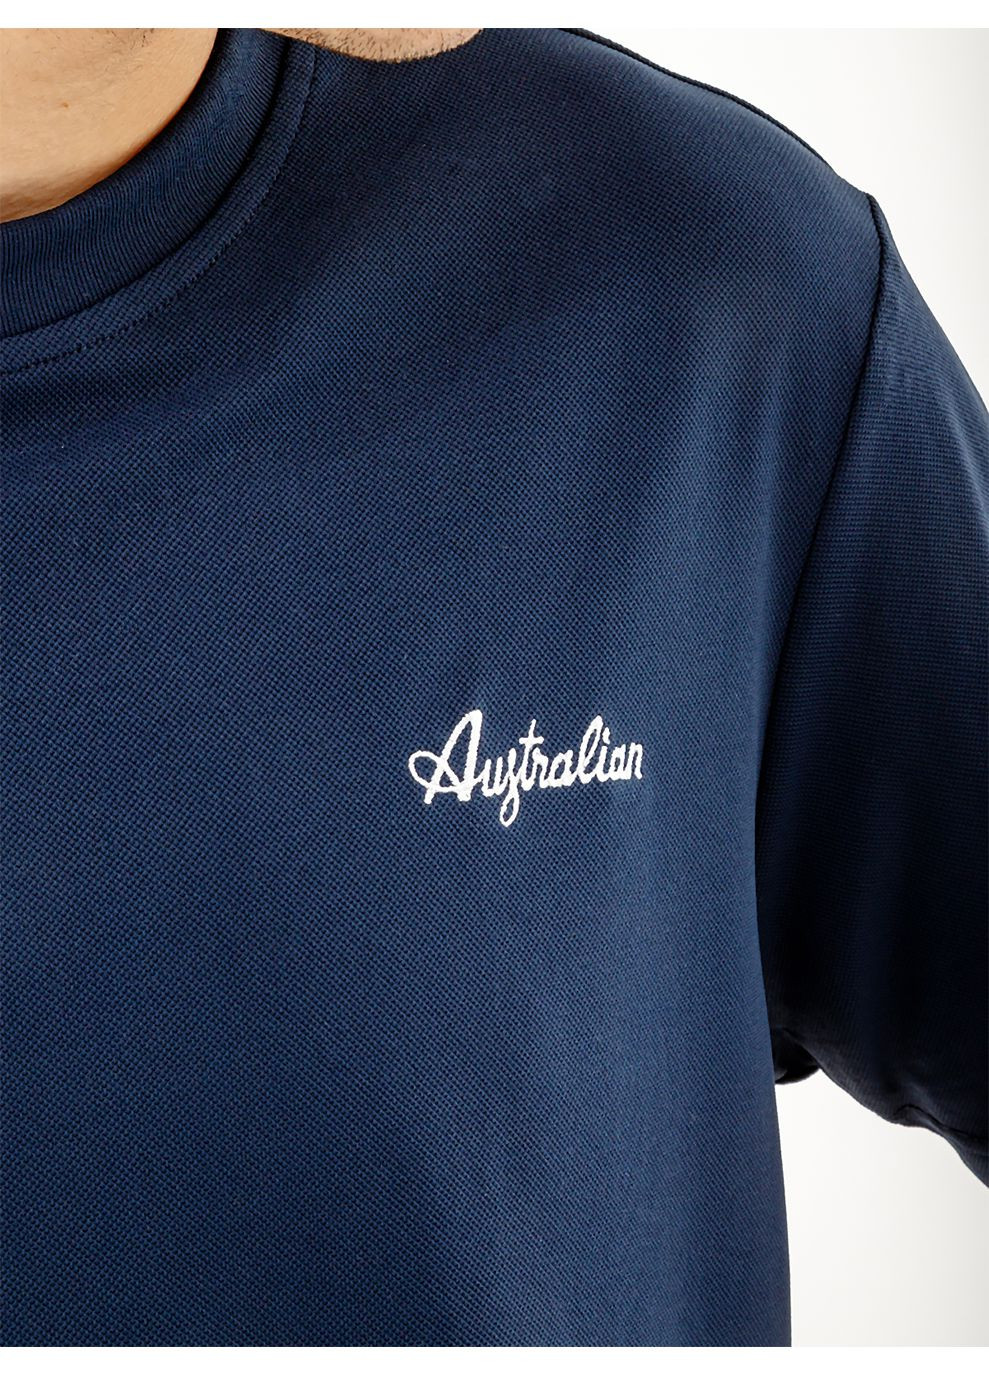 Синяя мужская футболка easy tech pique' t-shirt r-fit синий Australian